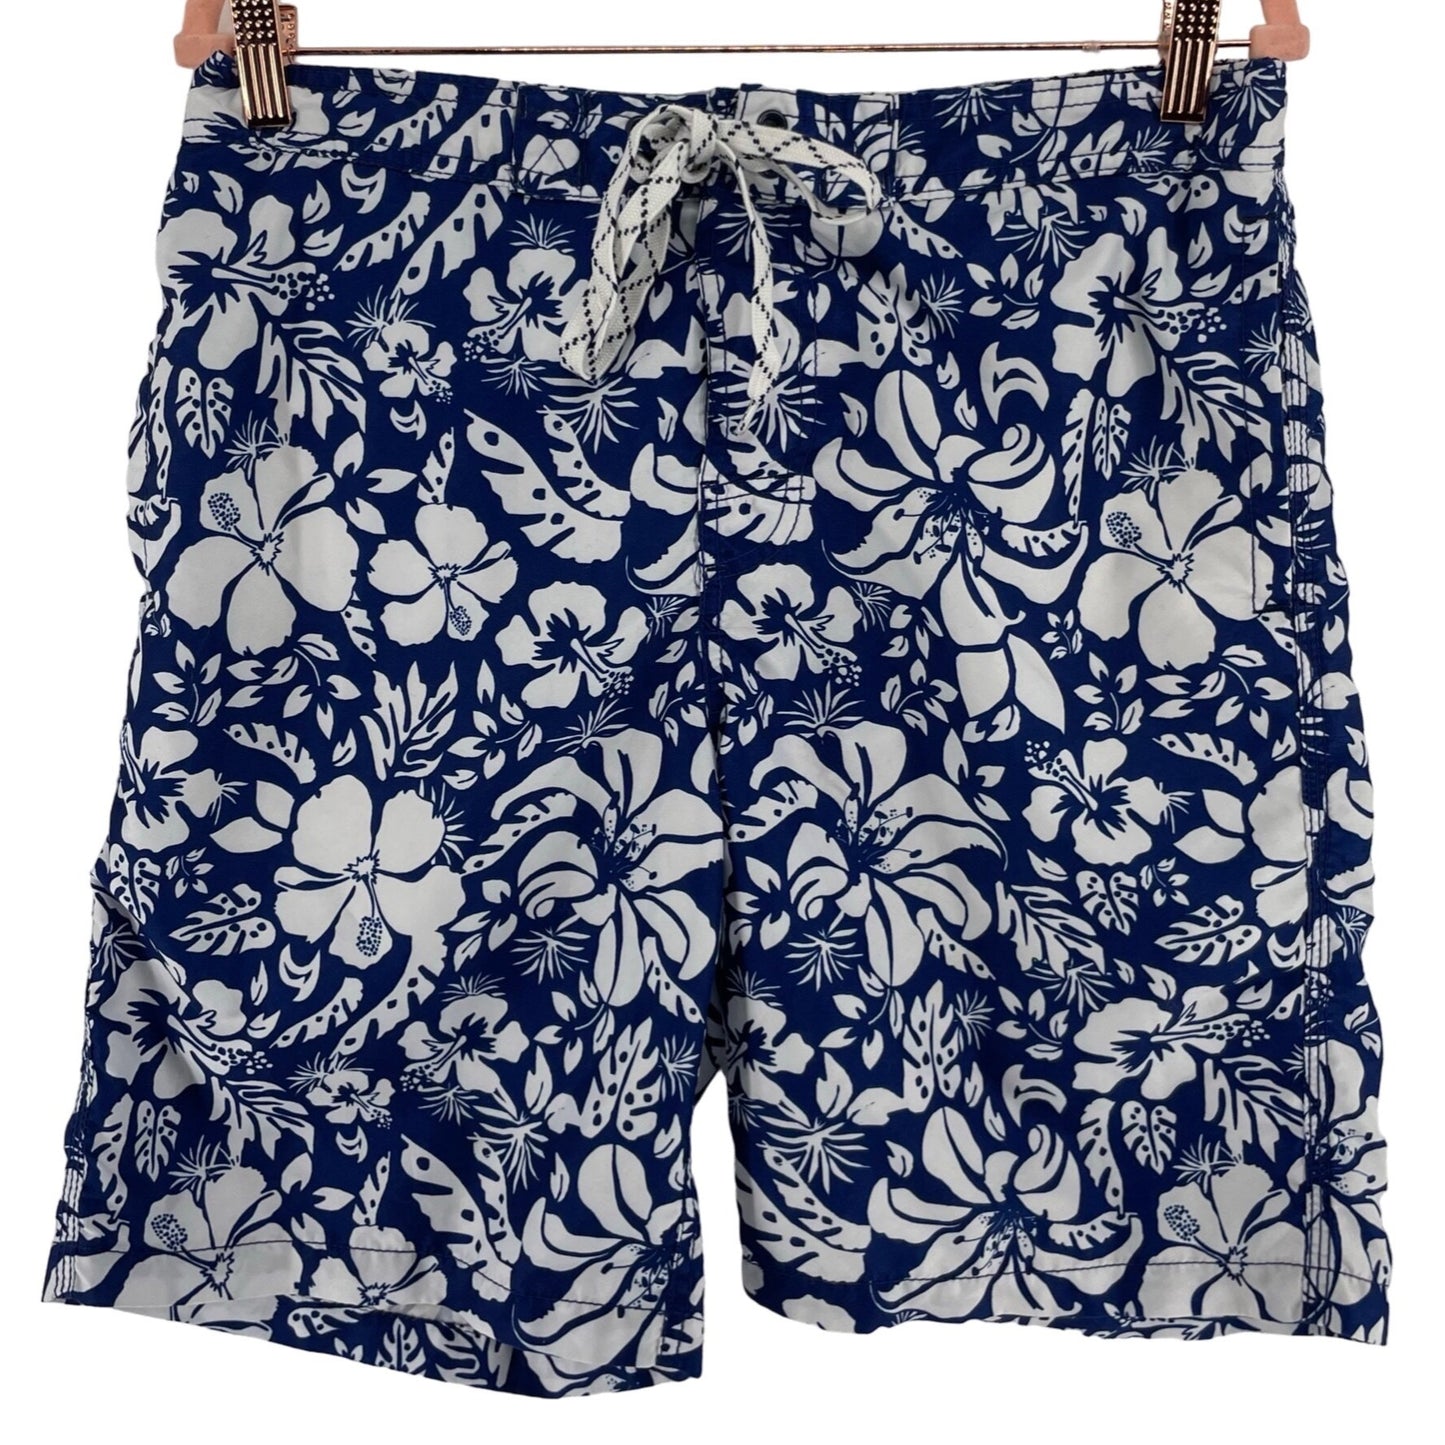 Merona Men's Size Medium Navy Blue & White Floral Swim Shorts